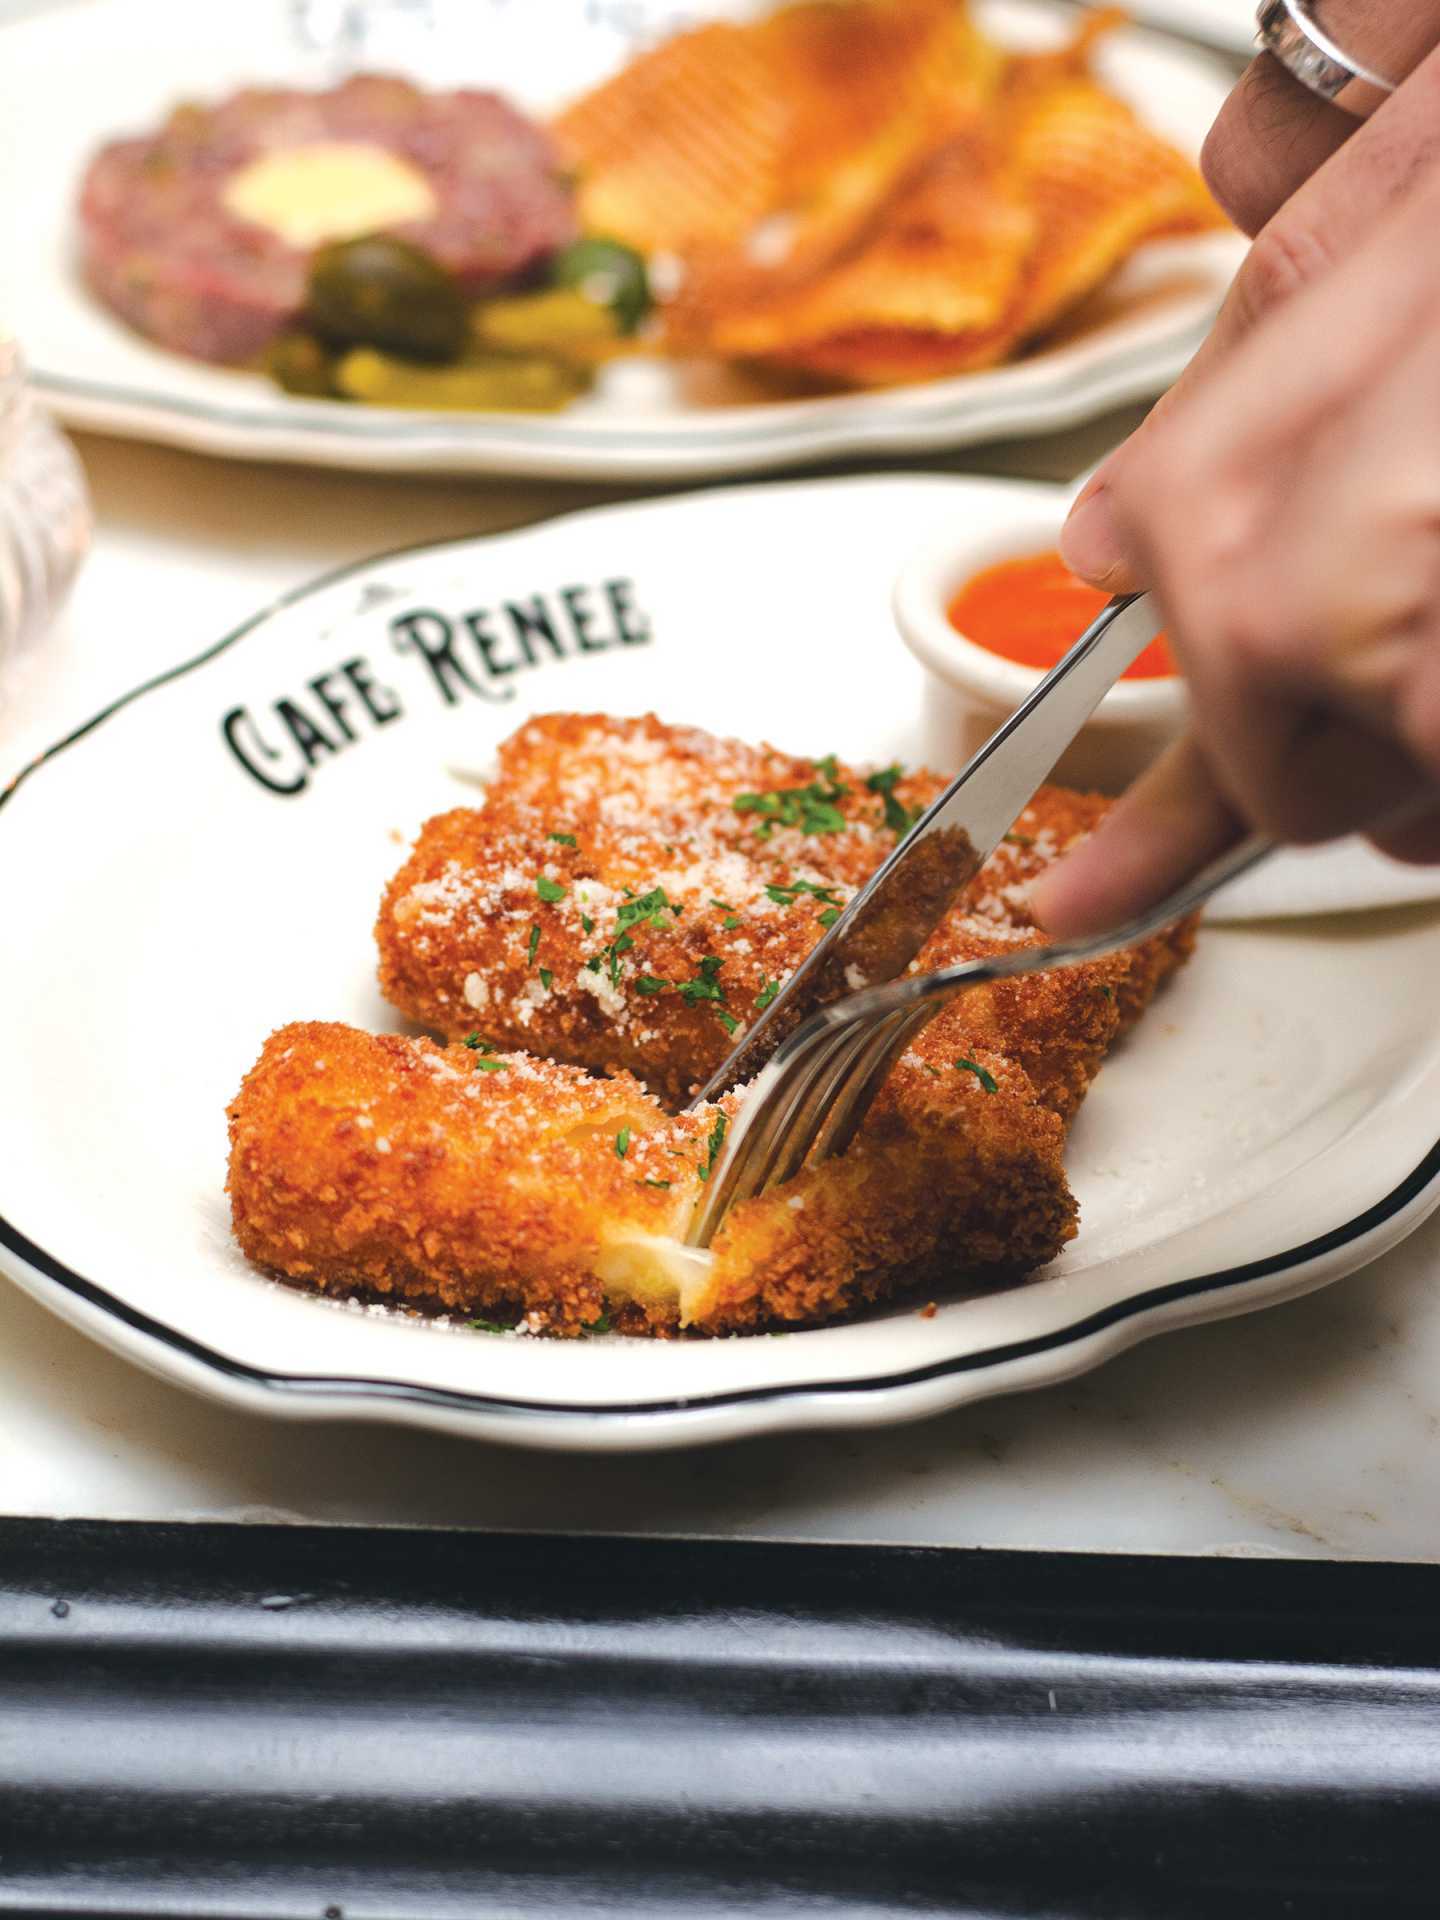 Best new Toronto restaurants | Gruyère cheese sticks at Cafe Renee in Toronto